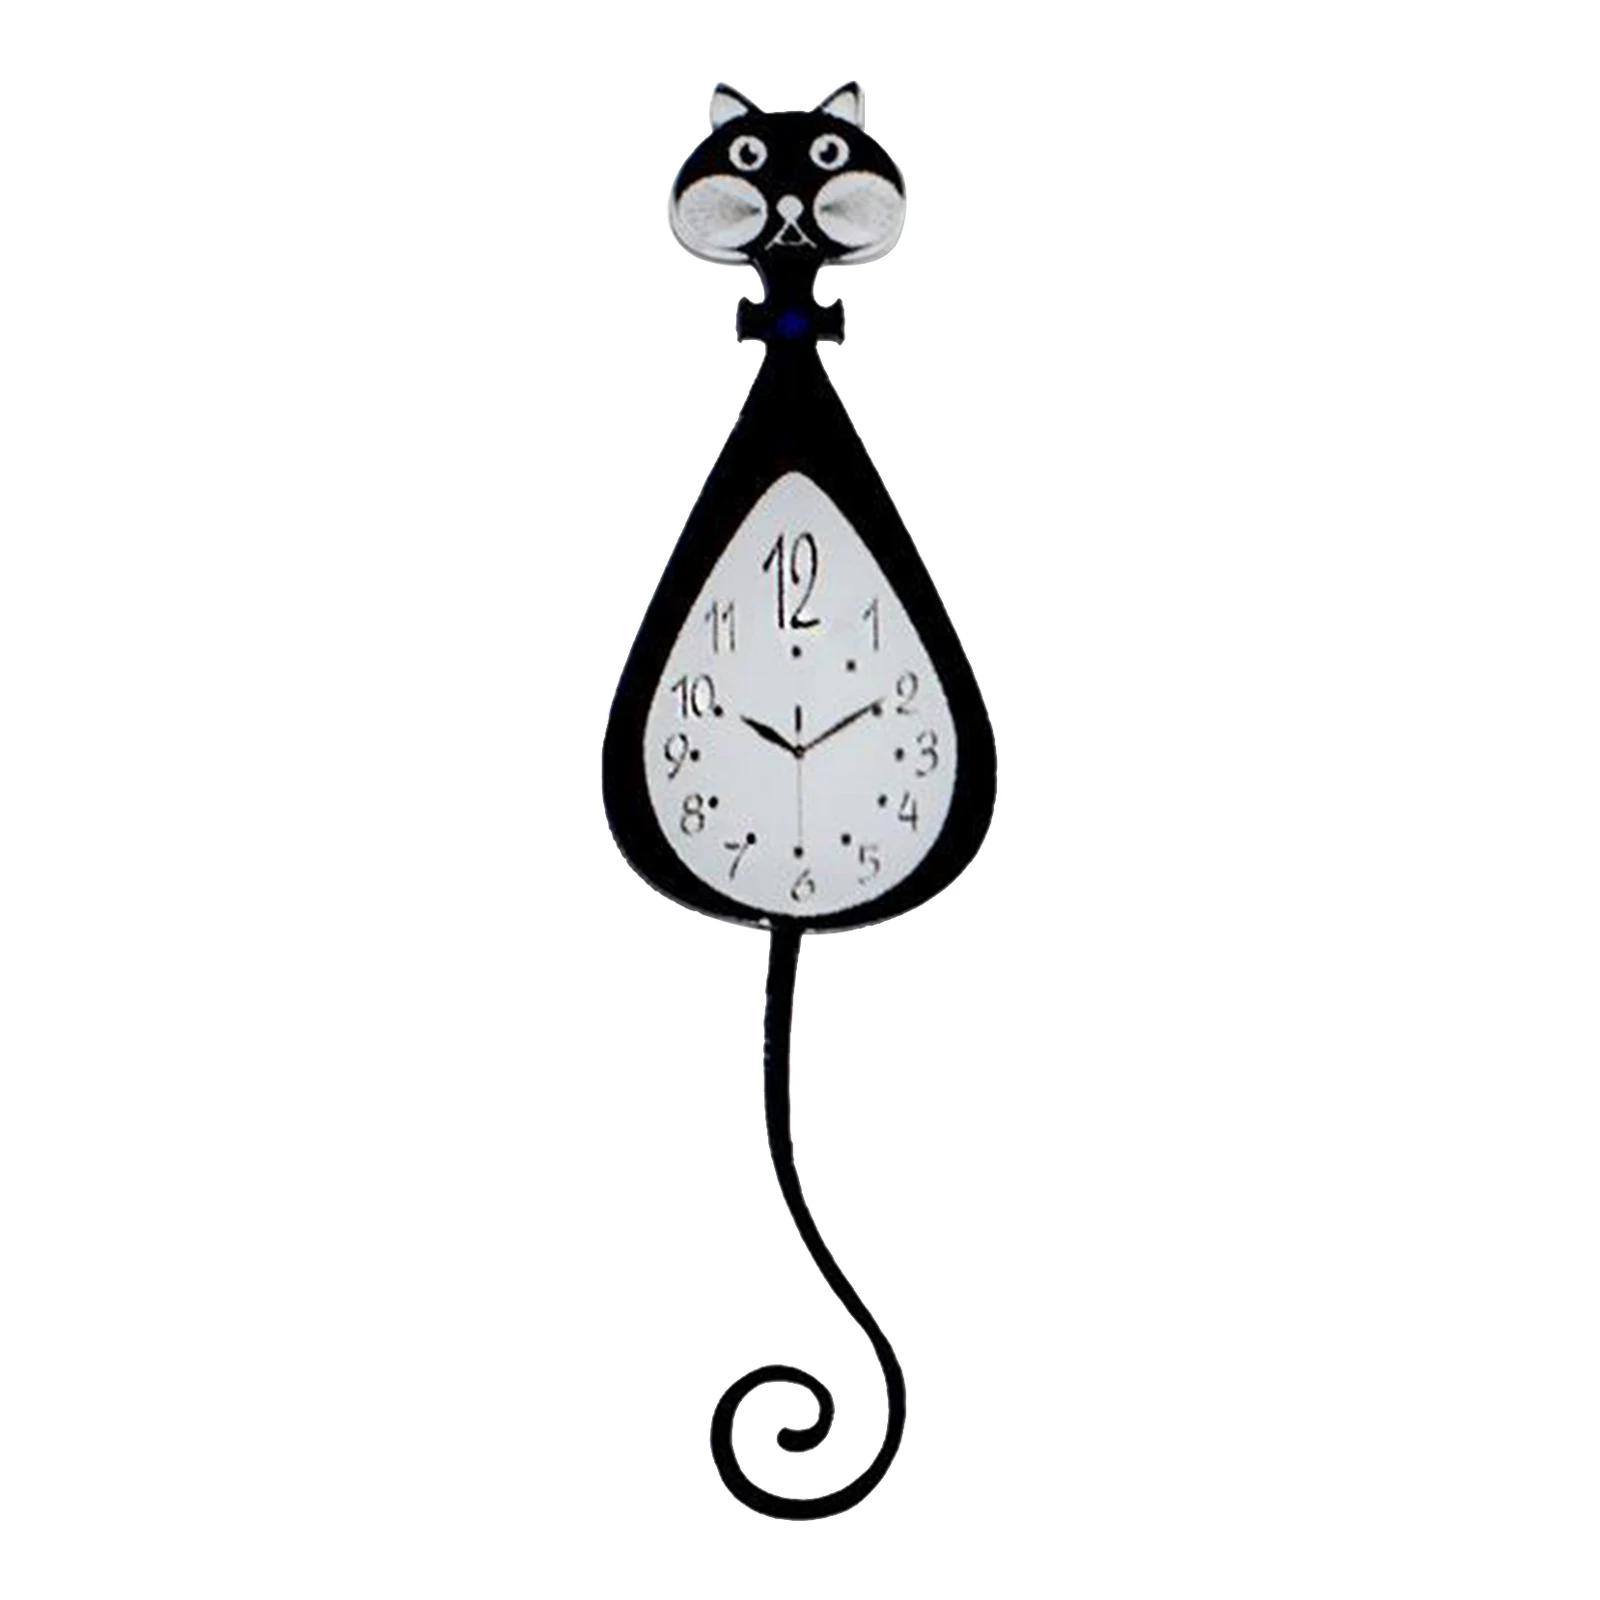 1pc 1:12 1:6 Scale Dollhouse Miniature Black Cat Clock Wall Clock Decor